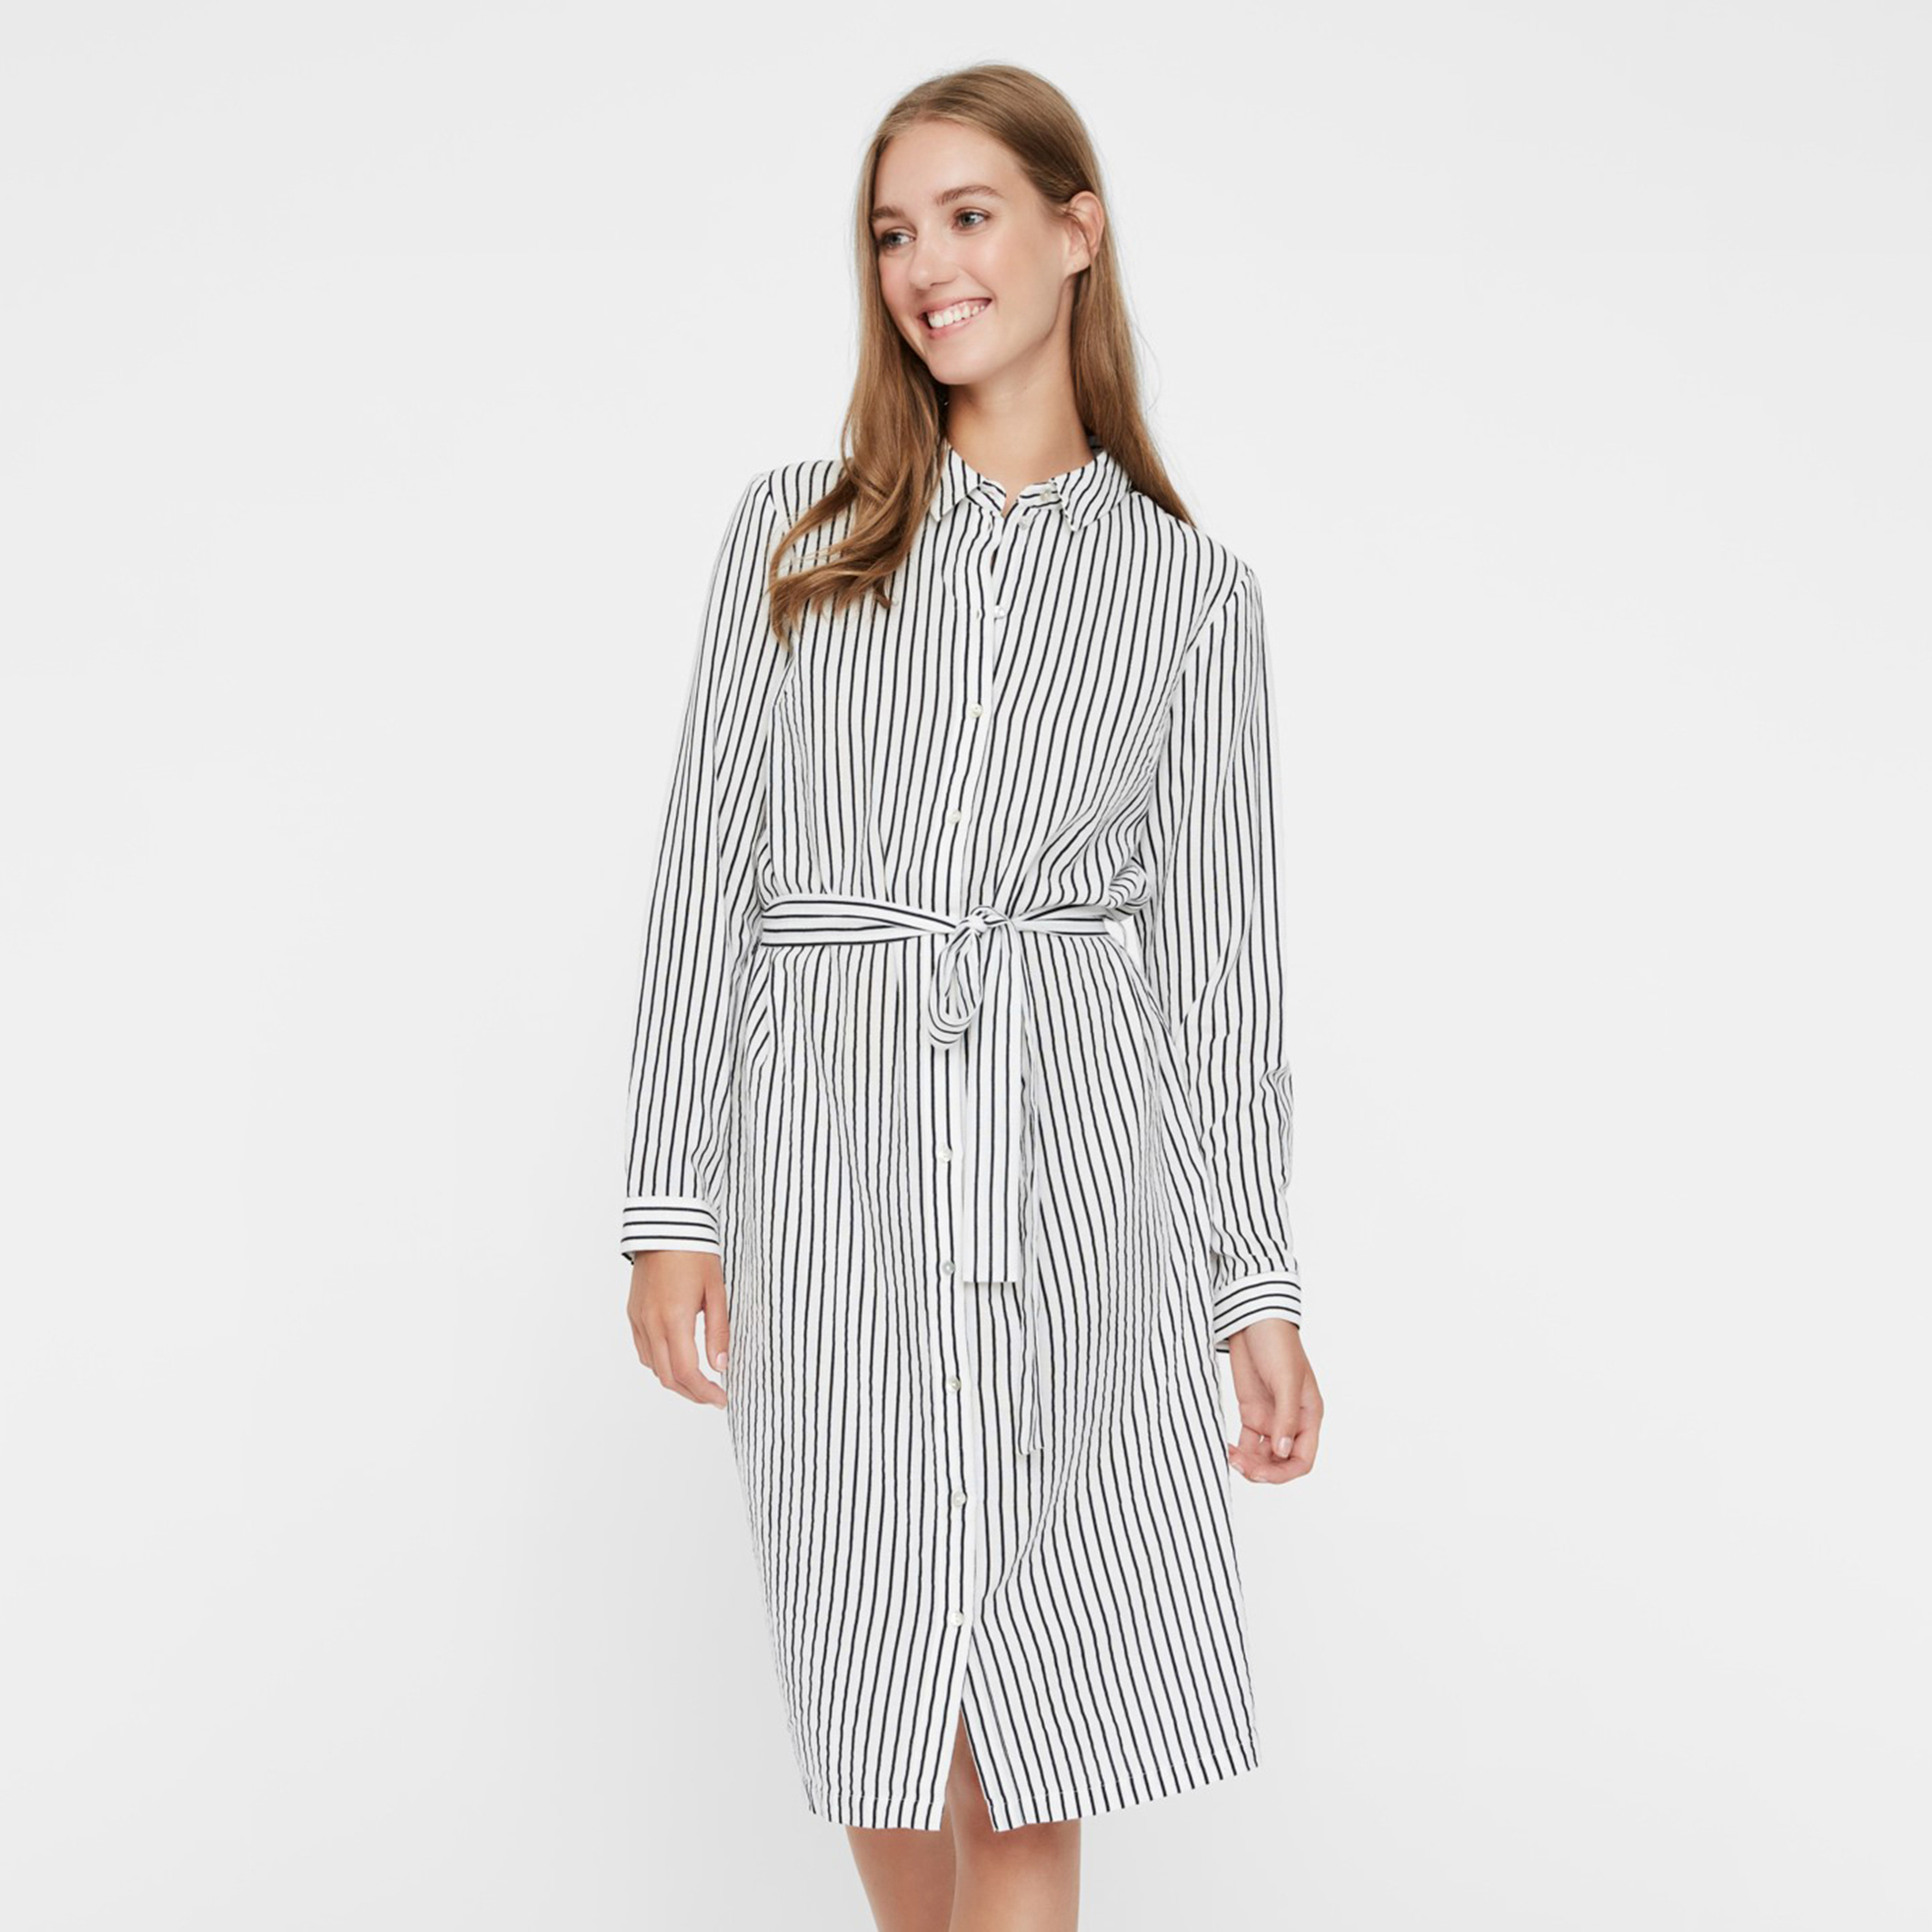 Håndværker snave tømmerflåde Knee-length shirt dress in striped cotton with tie-waist , white/navy blue  stripes, Vero Moda | La Redoute